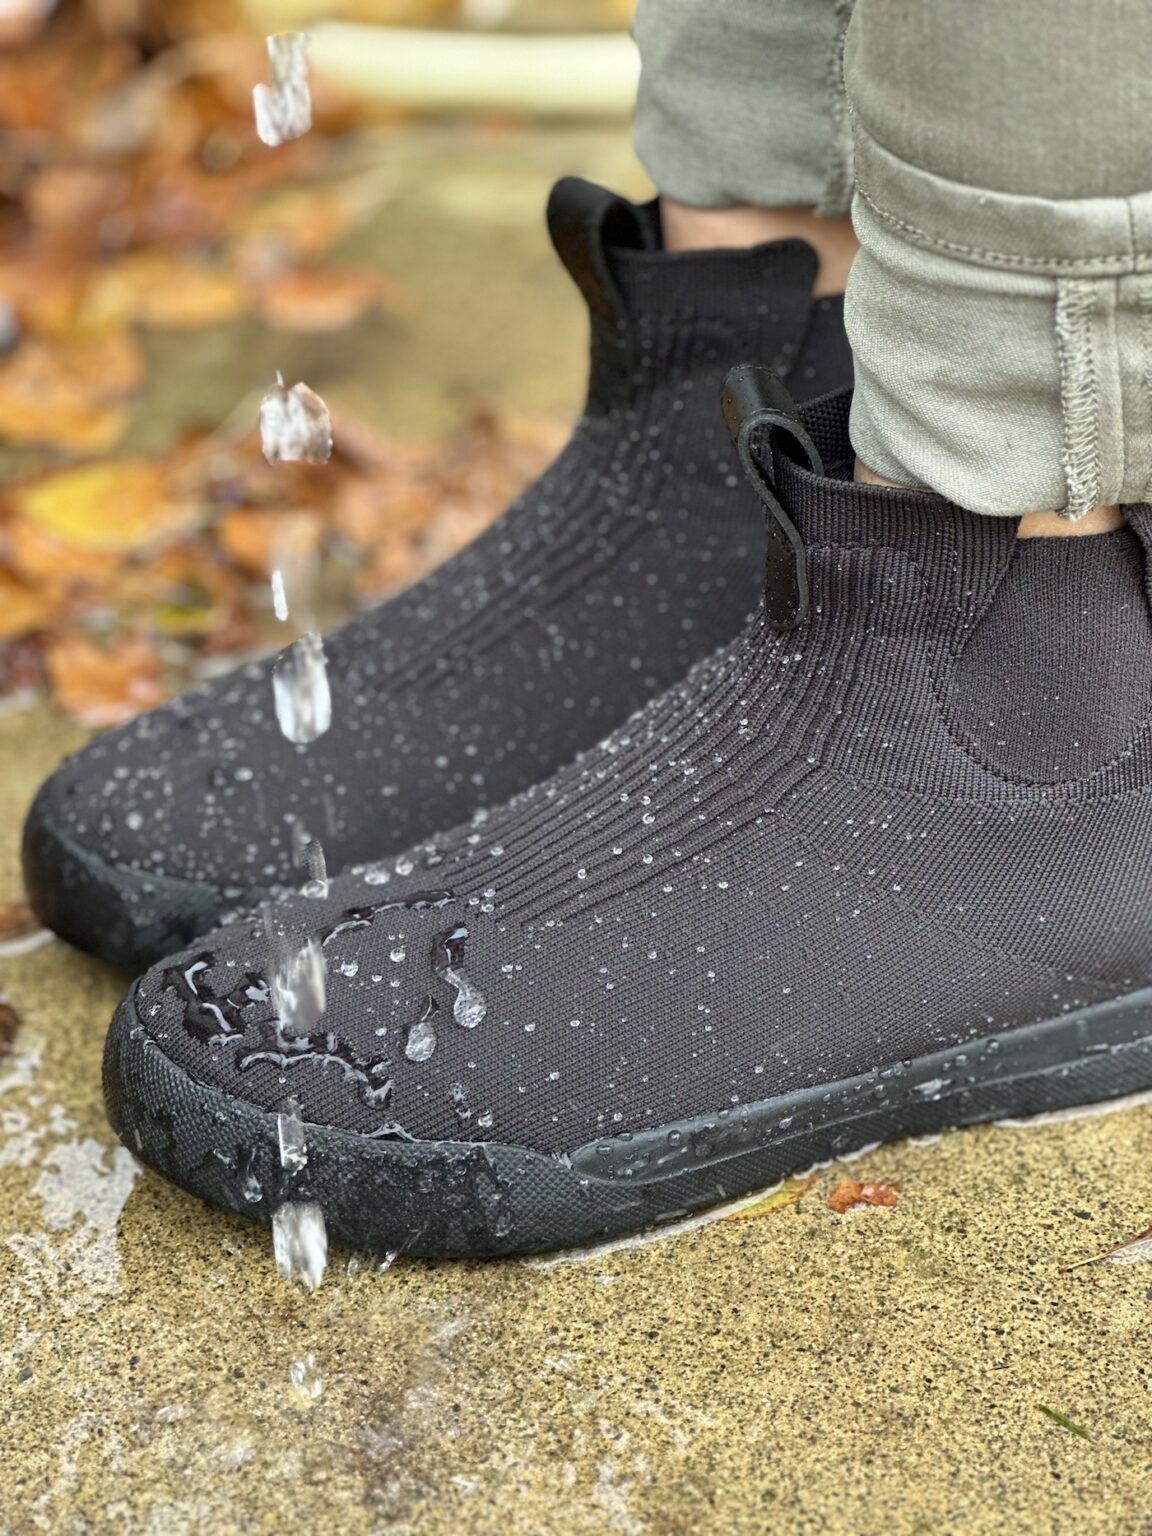 Vessi 100% Waterproof Shoes Review - OneSmileyMonkey.com